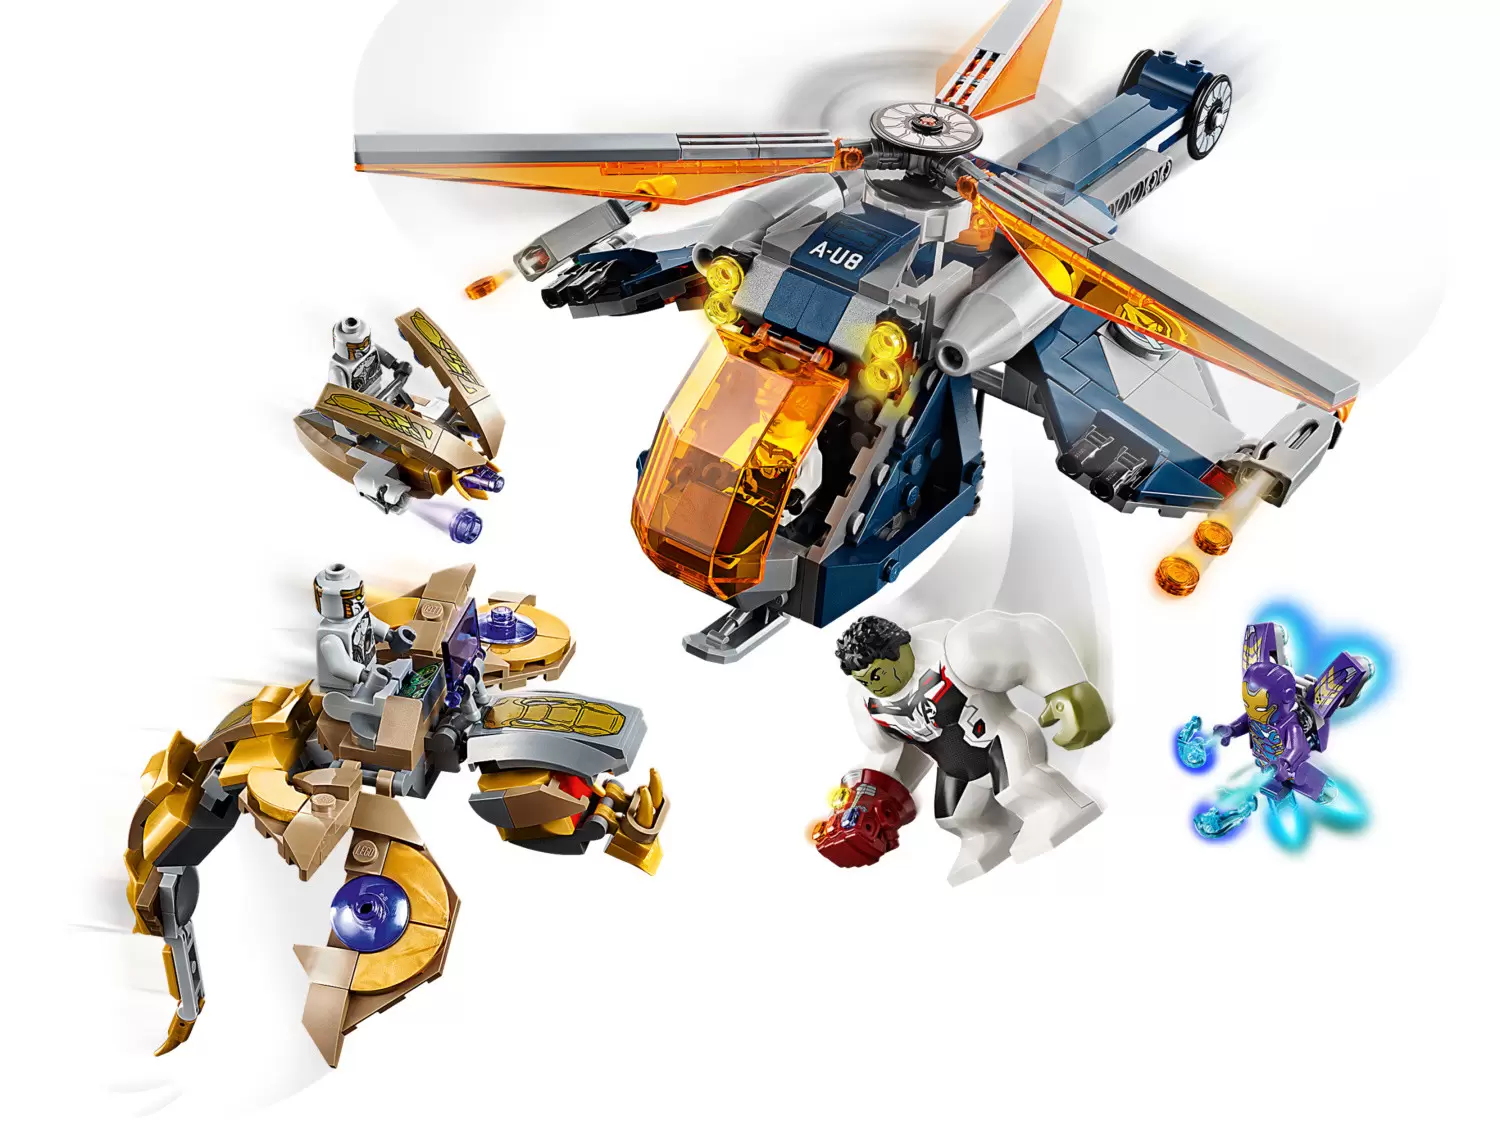 LEGO MARVEL Super Heroes - Avengers Hulk Helicopter Rescue